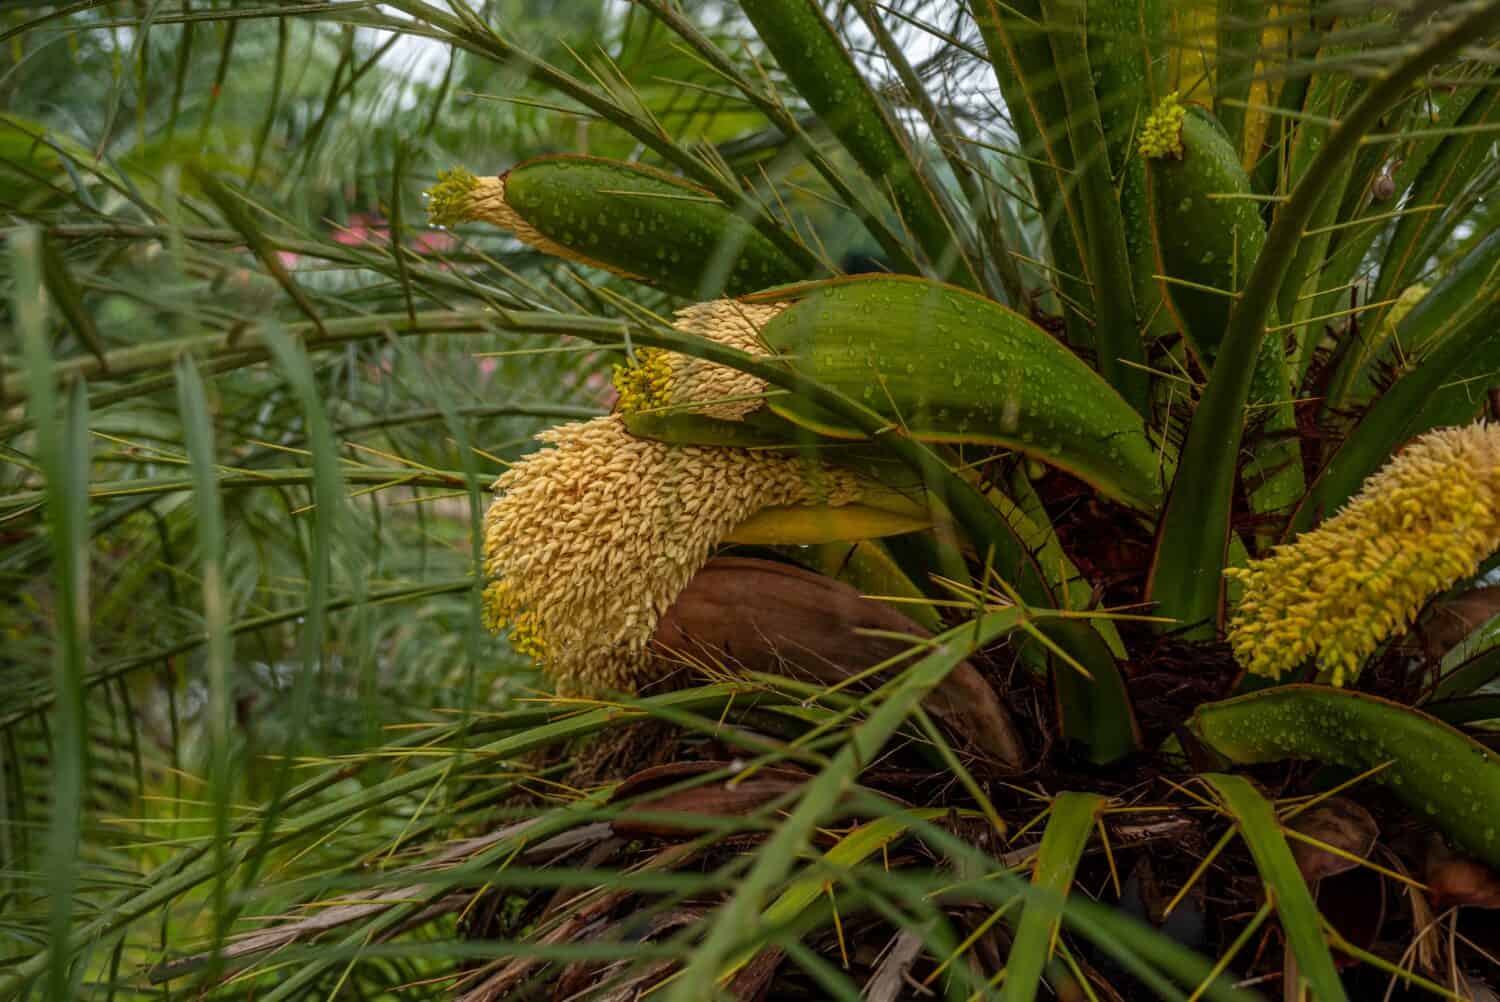 beautiful cluster of Phoenix Roebelenii (Pygmy date palm) yellowish flowers with rain drops